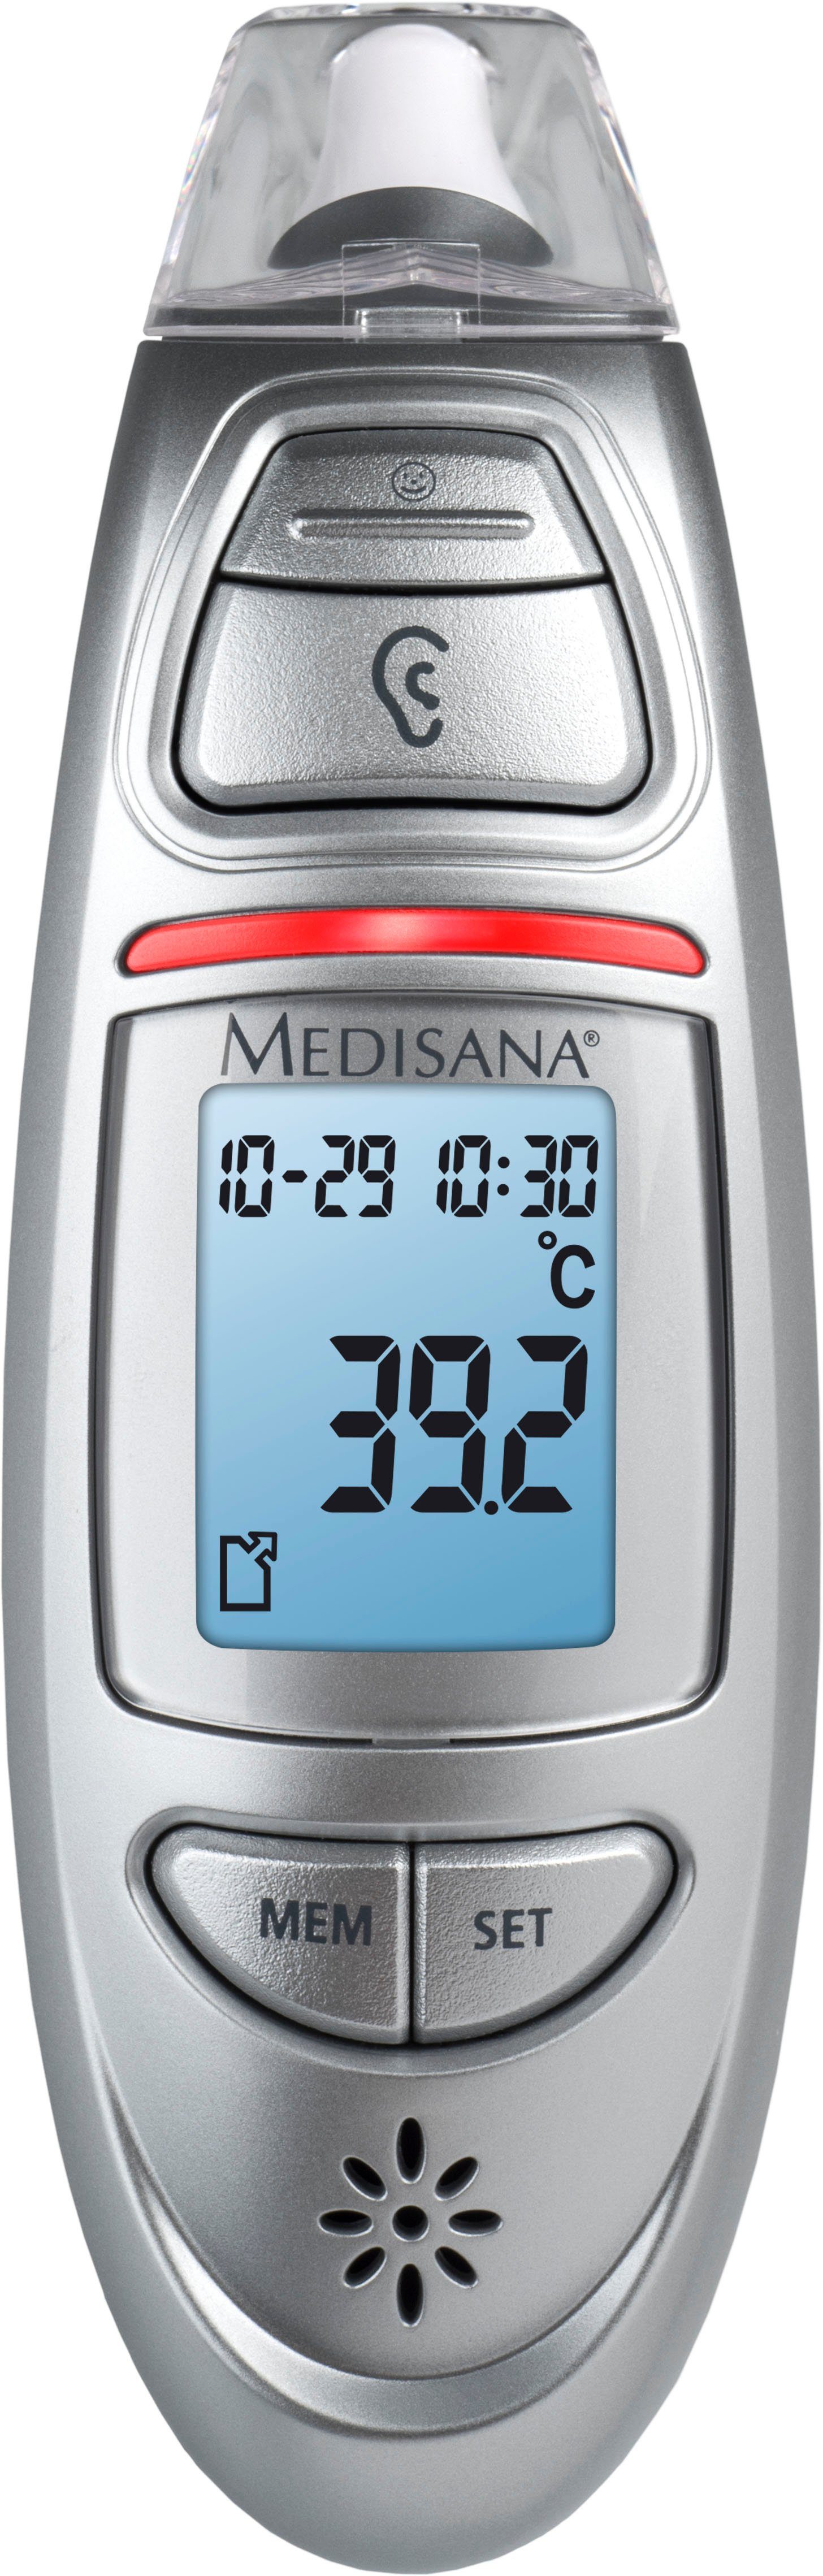 TM 750 Fieberthermometer Connect Medisana